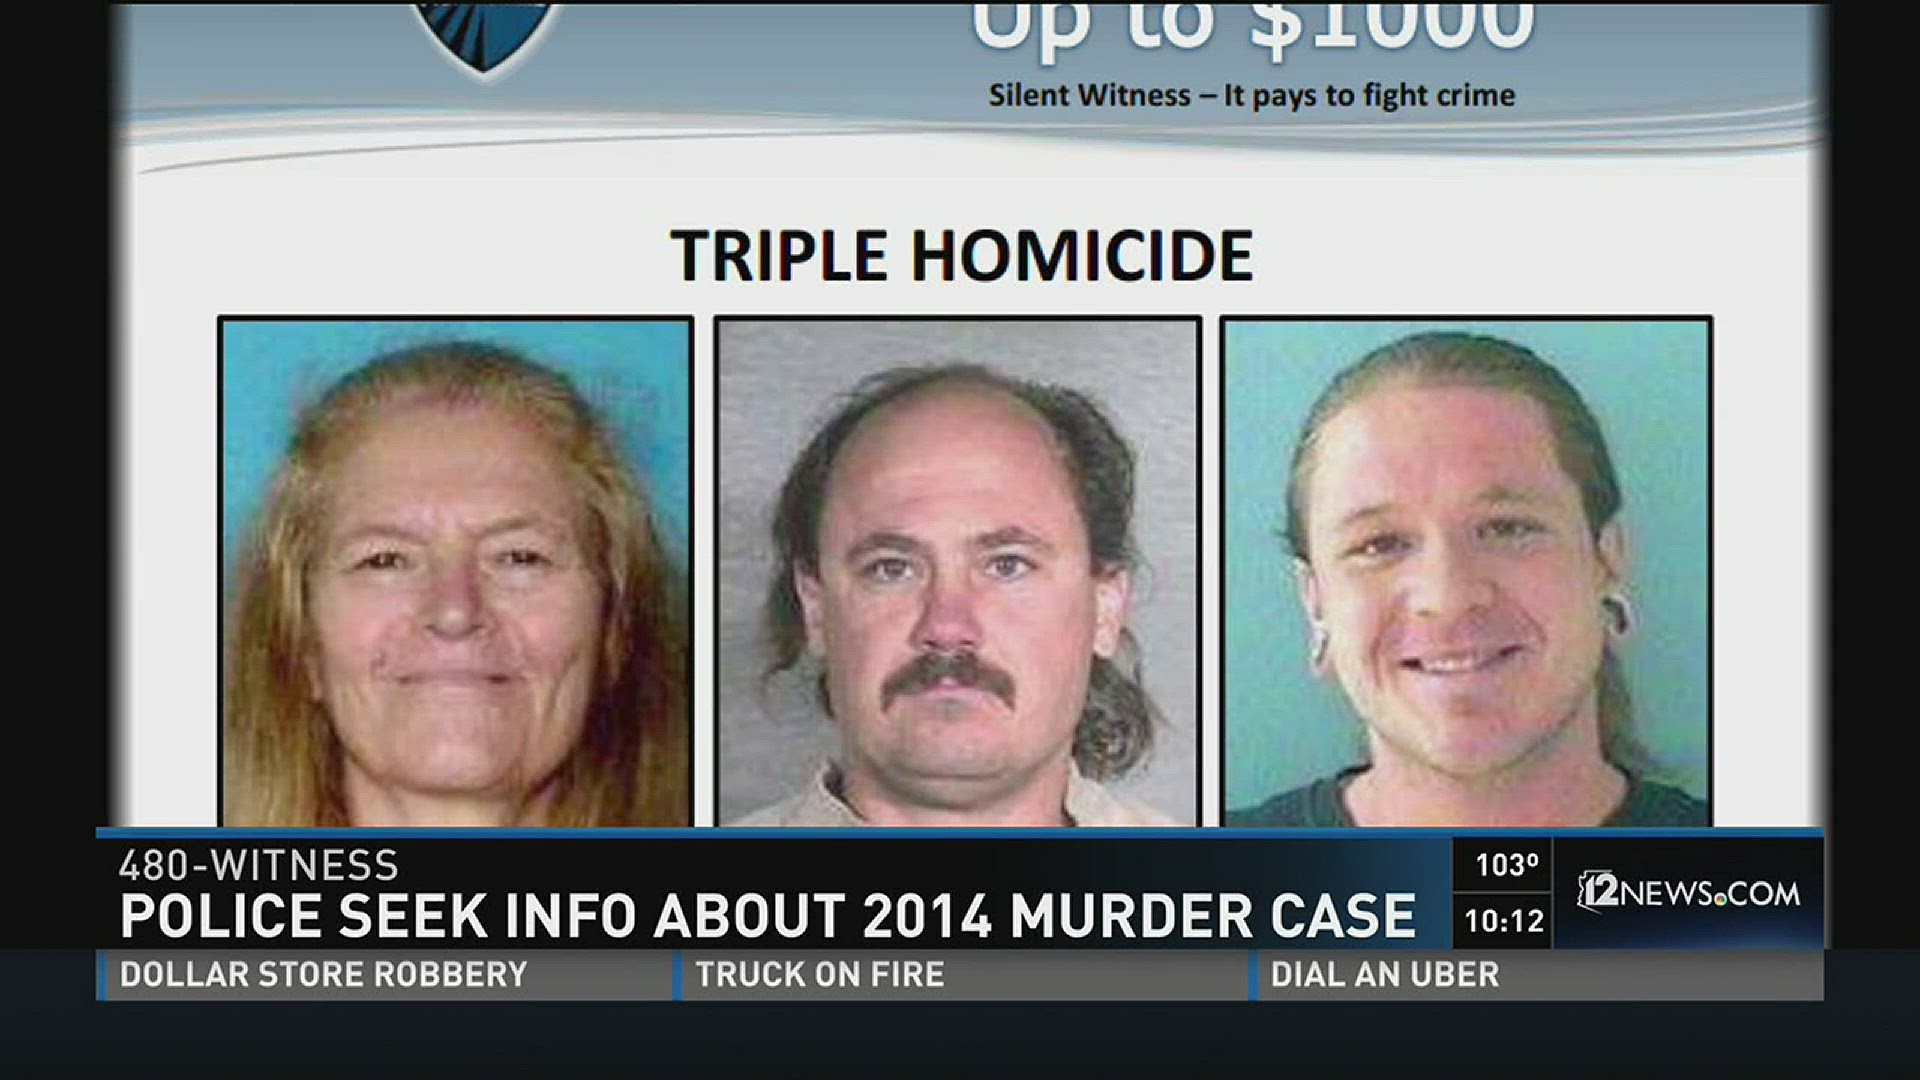 Police seek info about 2014 murder case